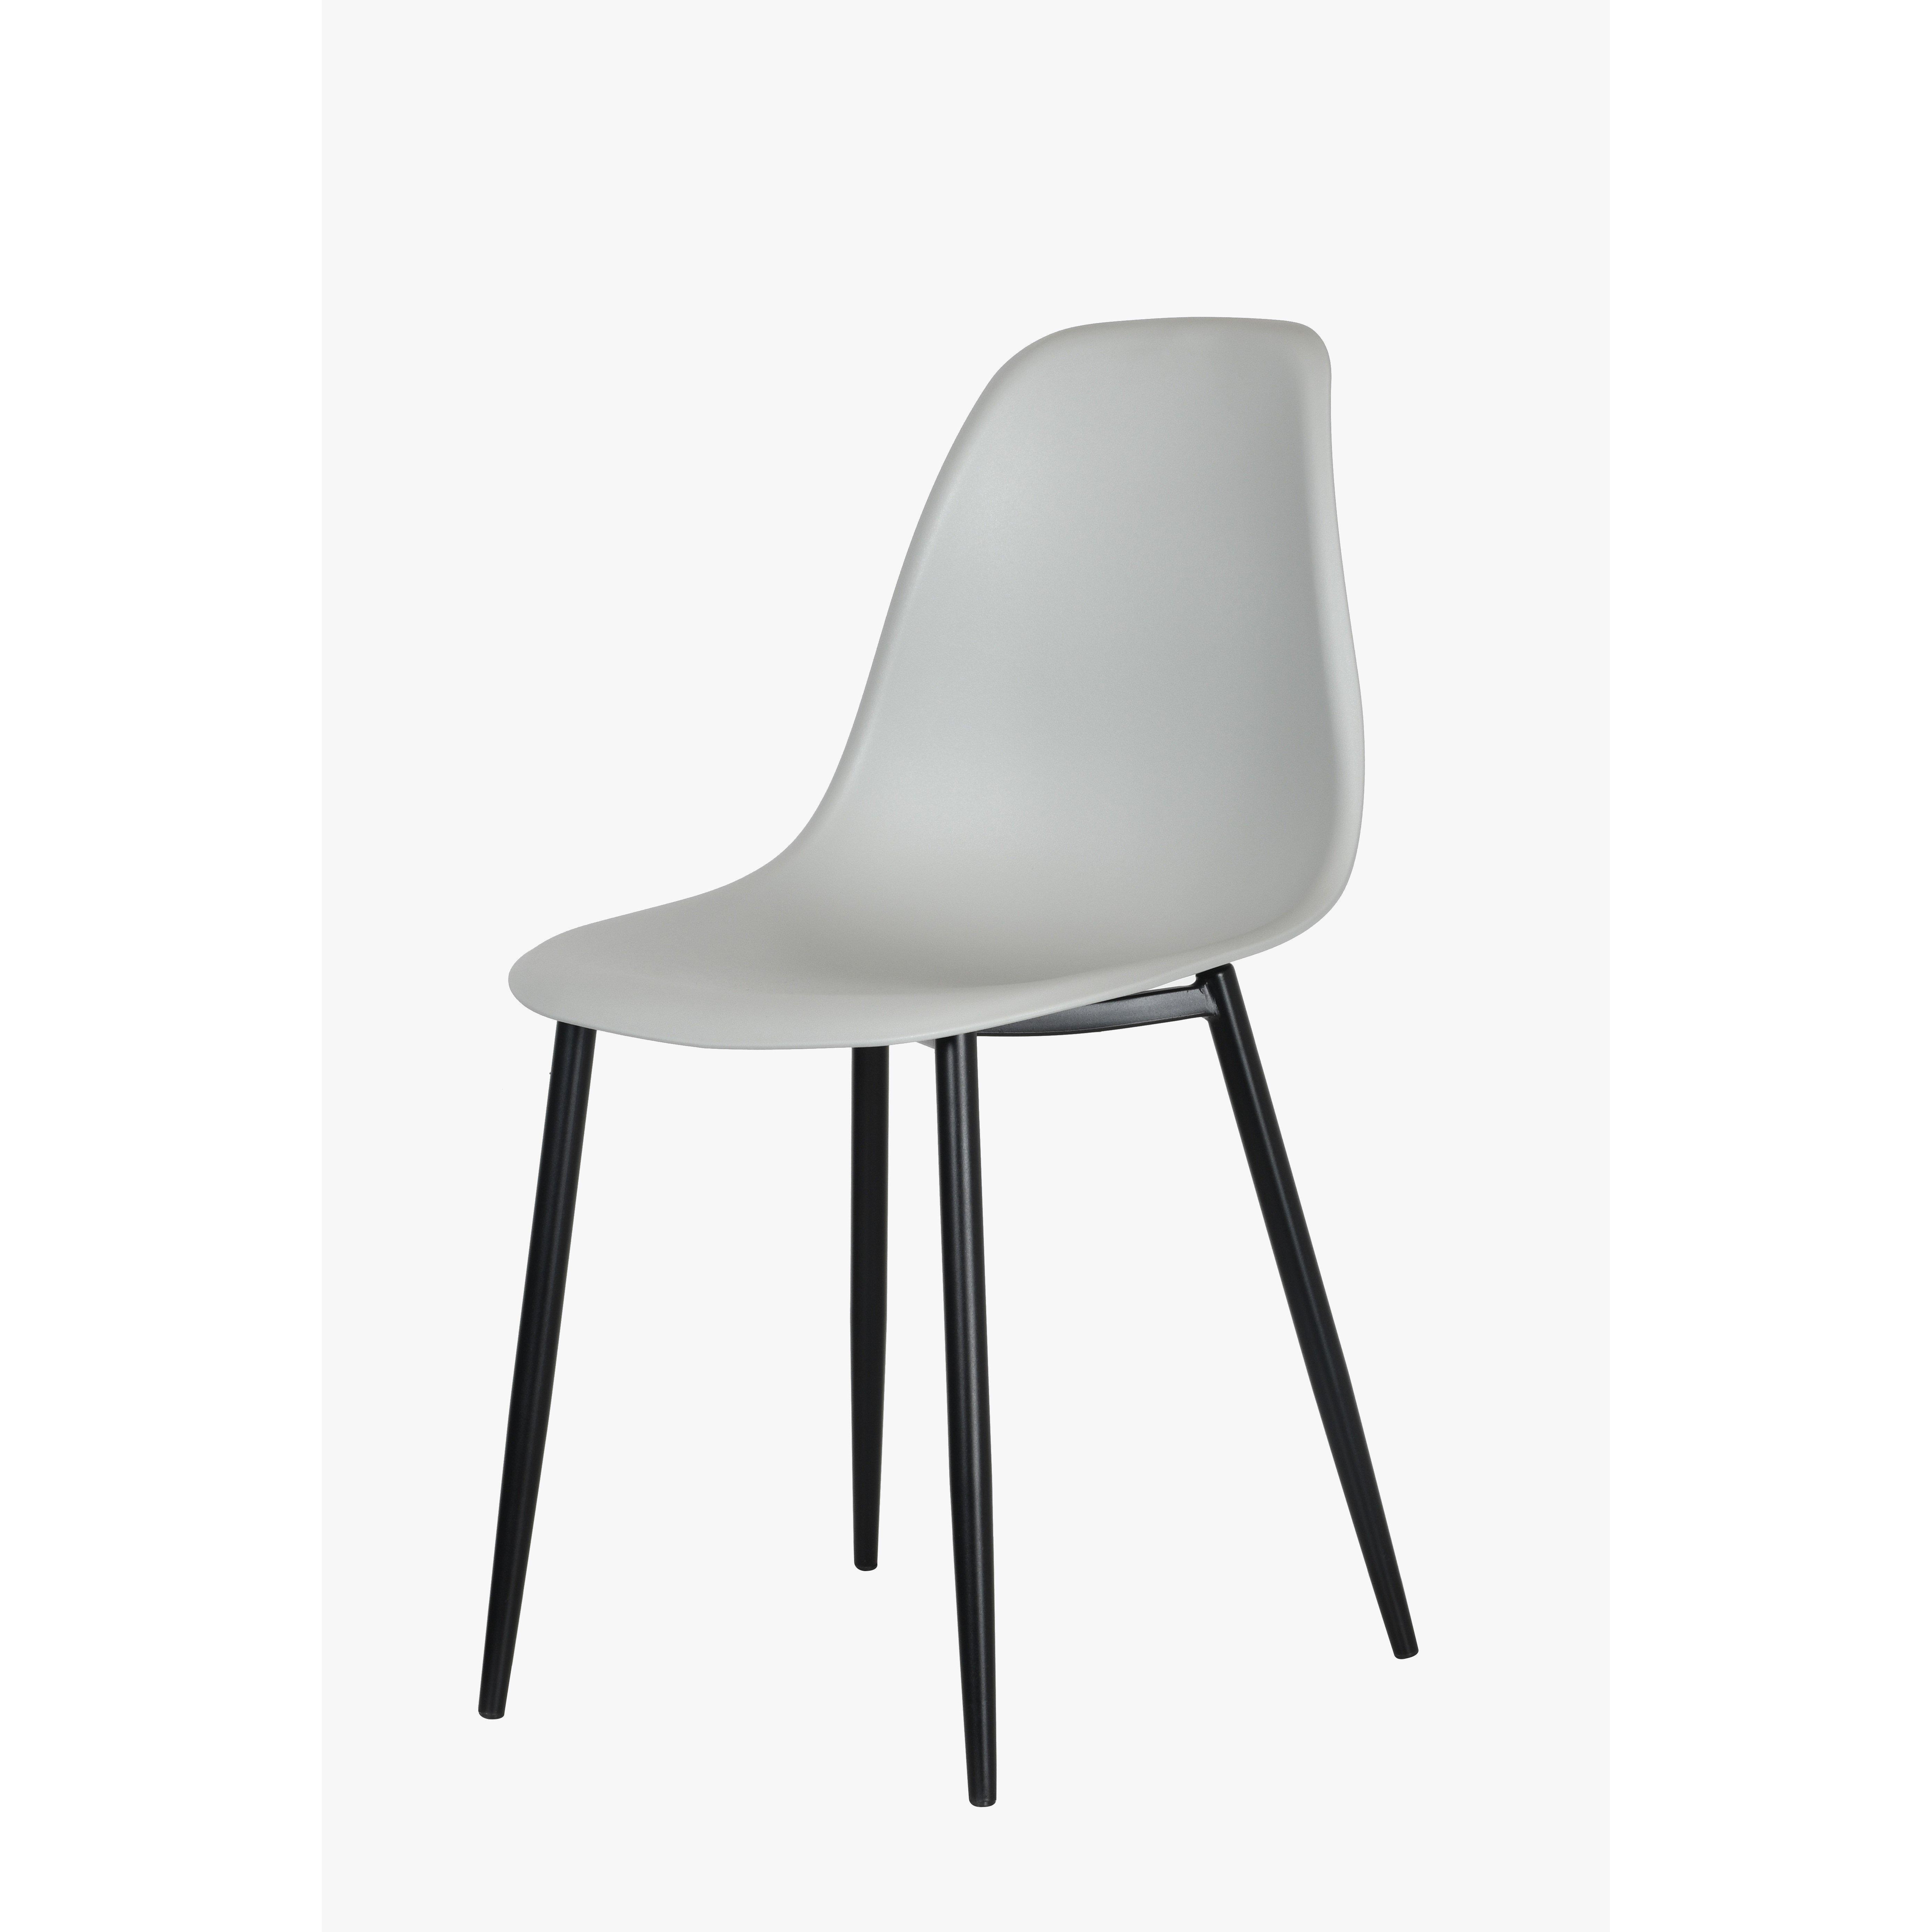 Aspen Curve Chair, Light Grey Plastic Seat With Black Metal Legs (Pair) - image 1